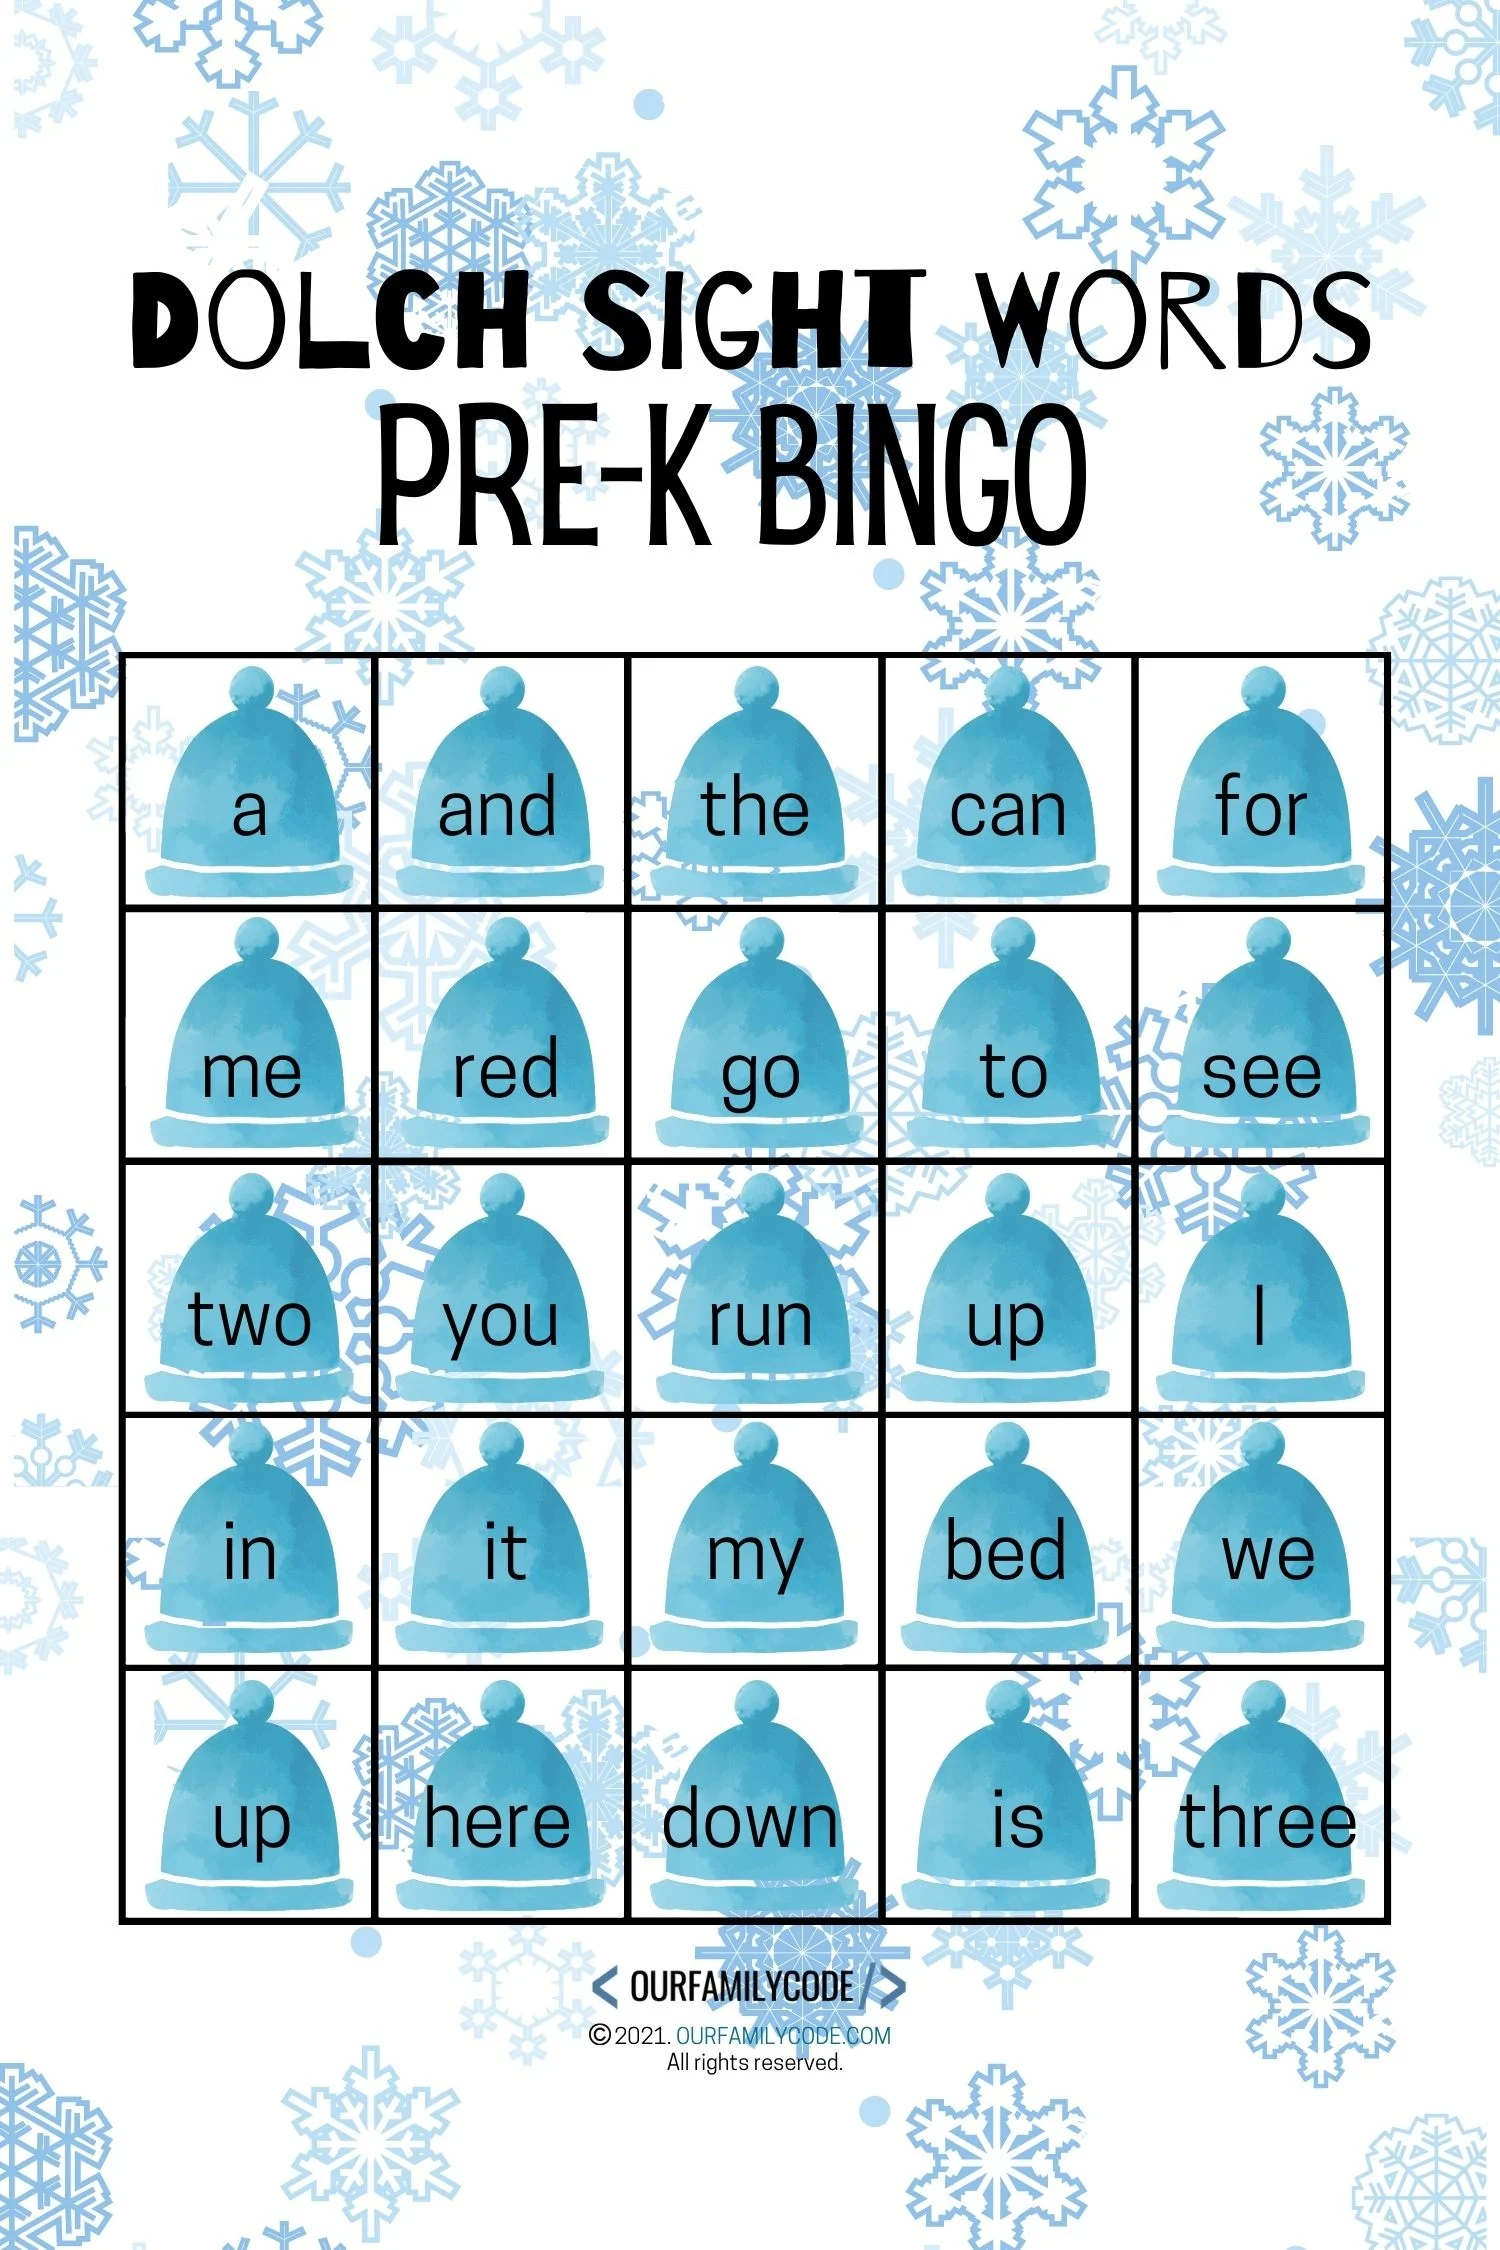 dolch sight word winter pre-k bingo